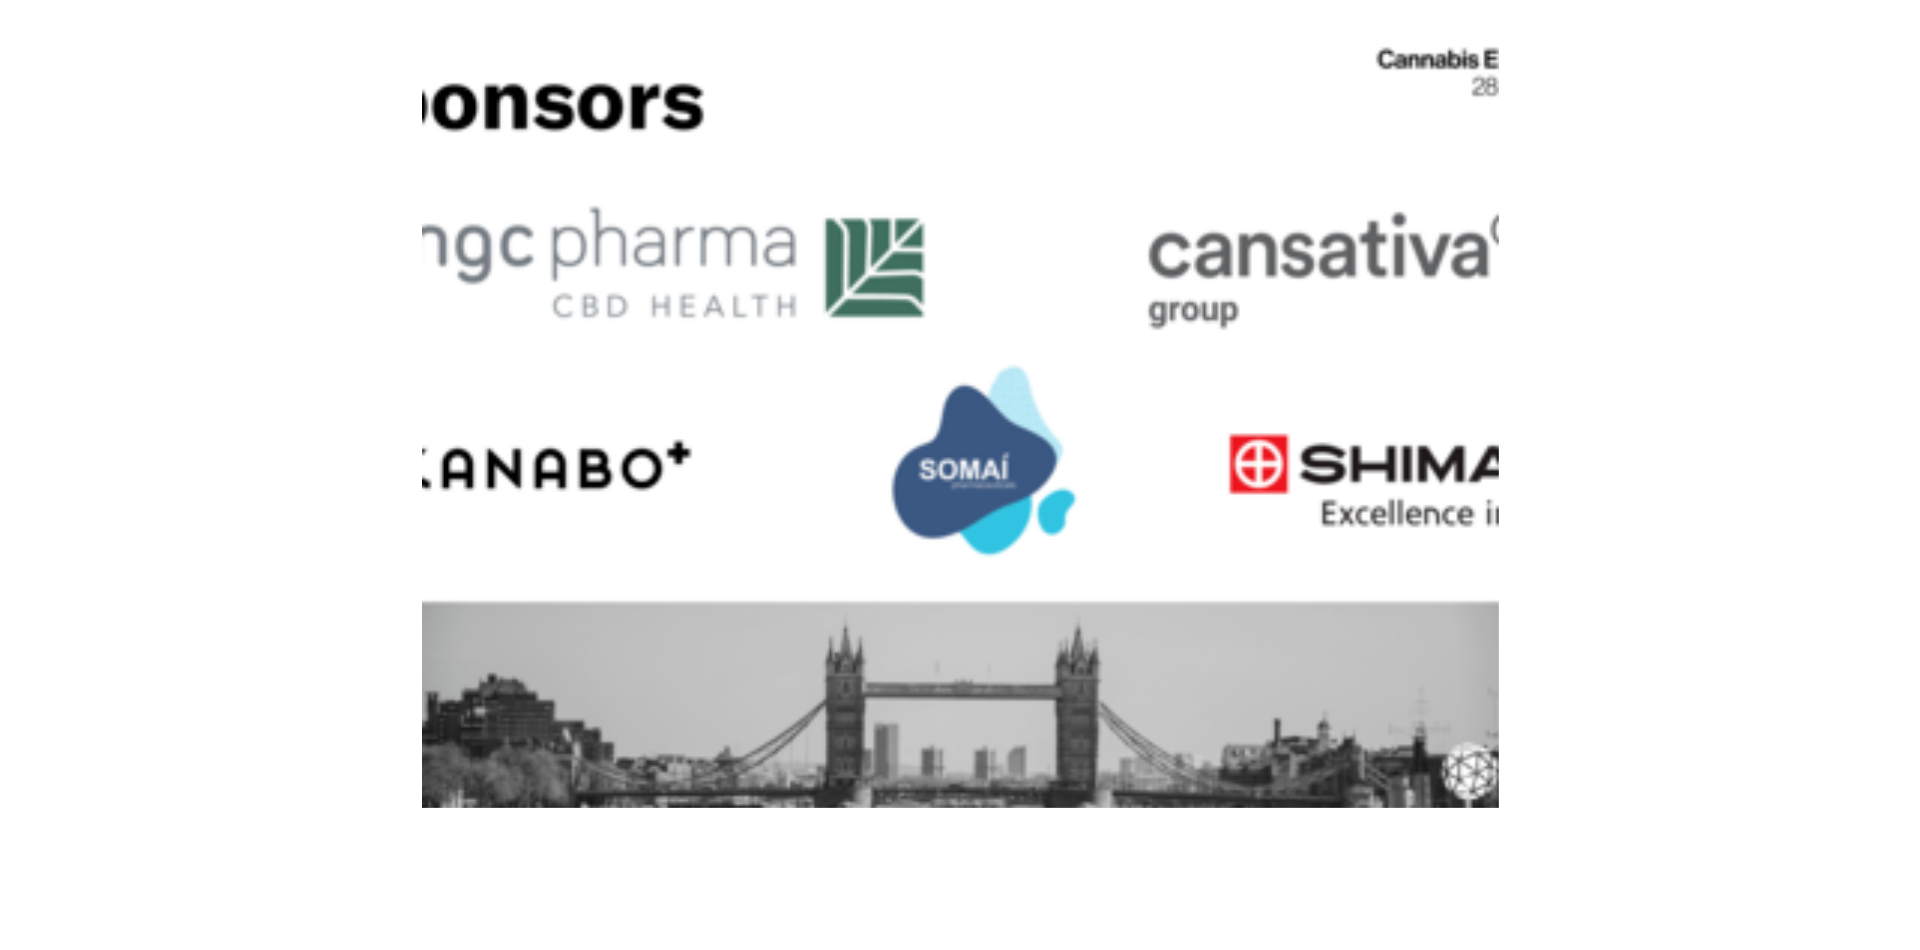 MGC Pharma, Cansativa Group & Somai Pharmaceuticals announced among Cannabis Europa sponsors